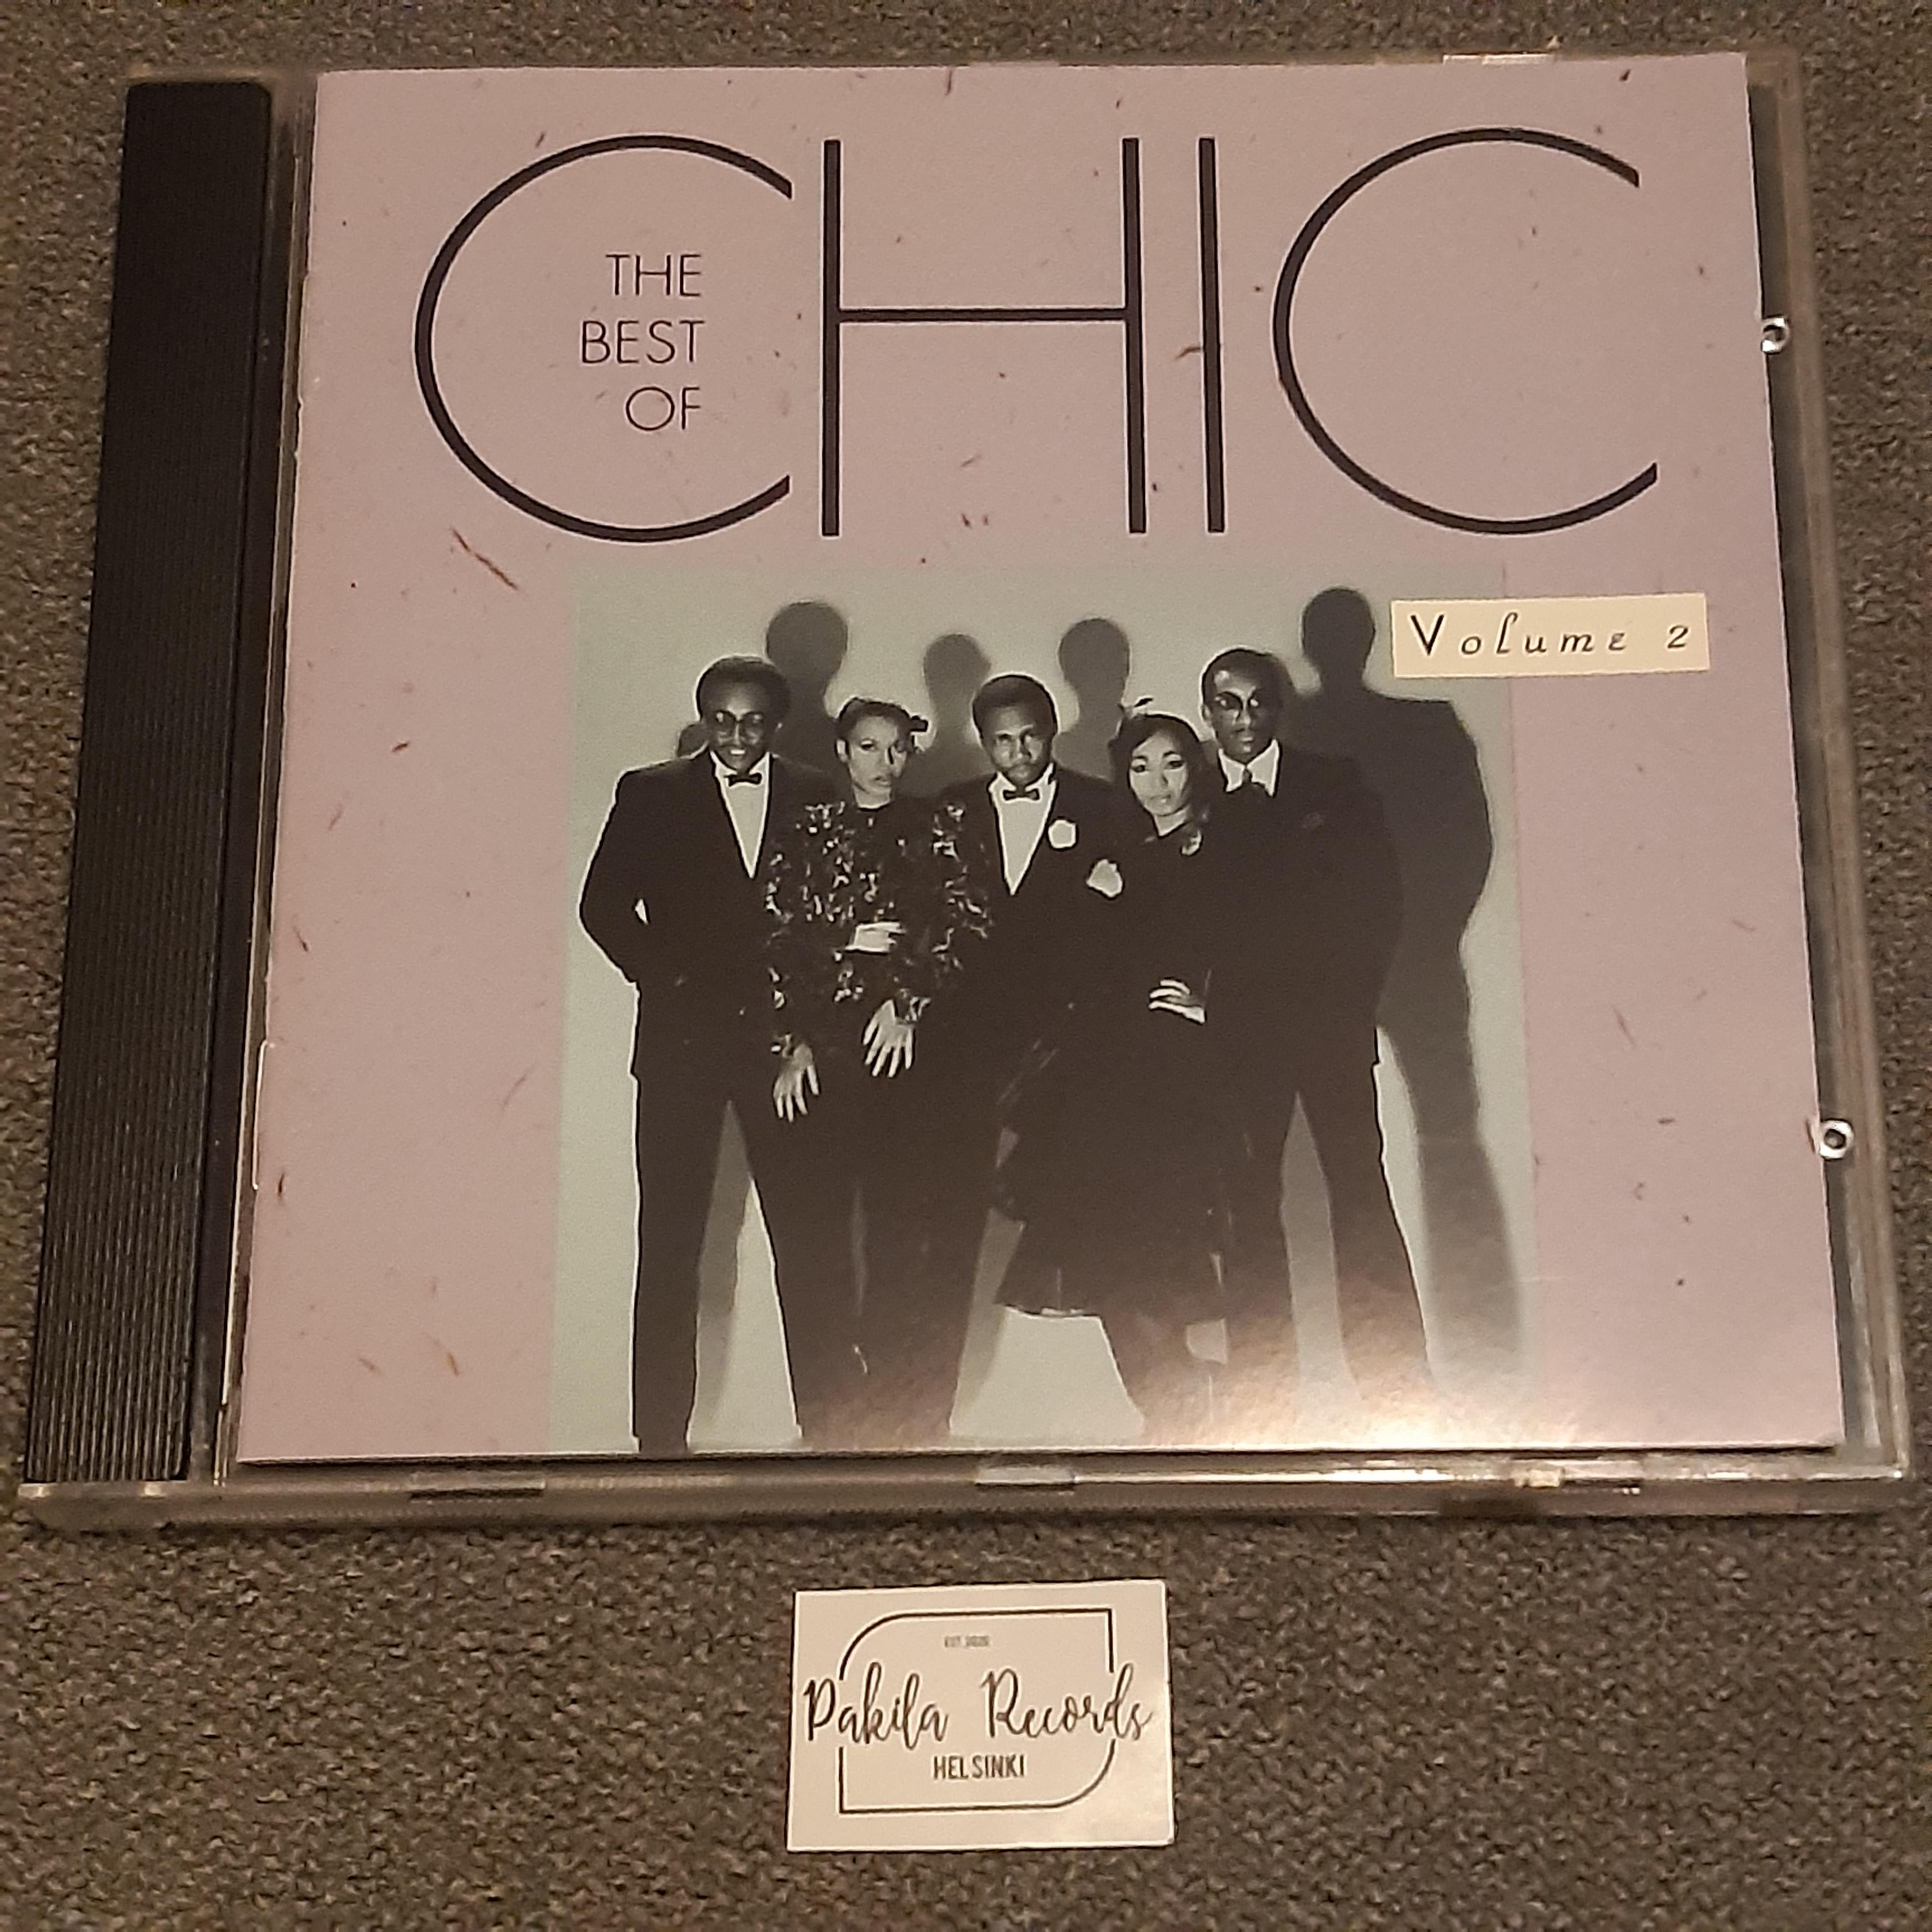 Chic - The Best Of, Volume 2 - CD (käytetty)